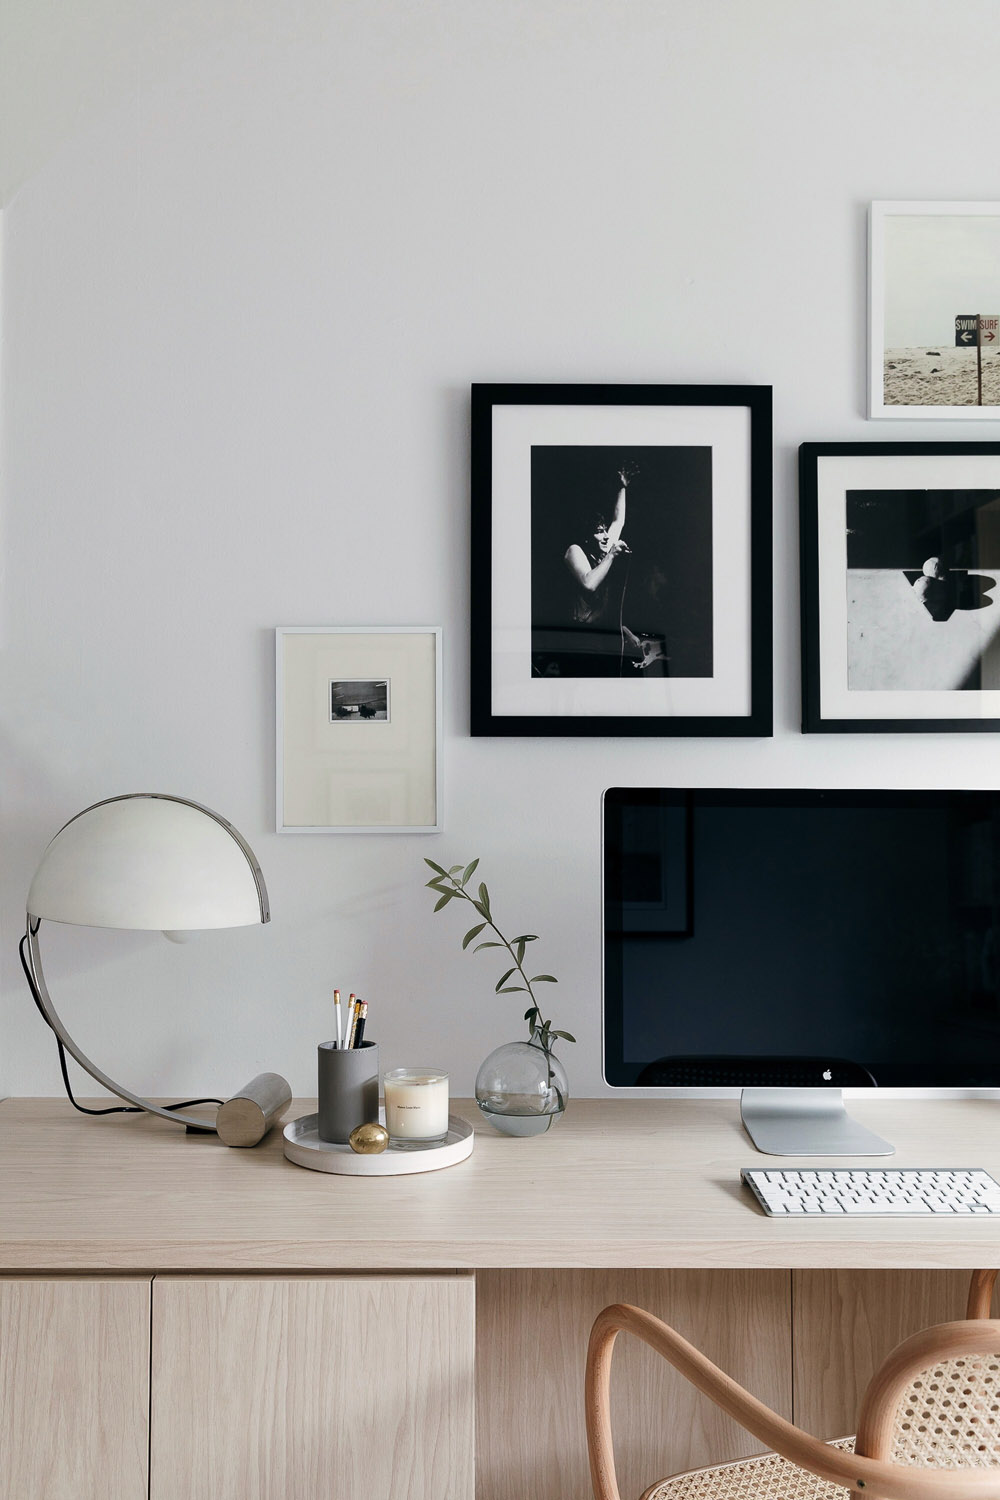 Modern Office Furniture + Accessories